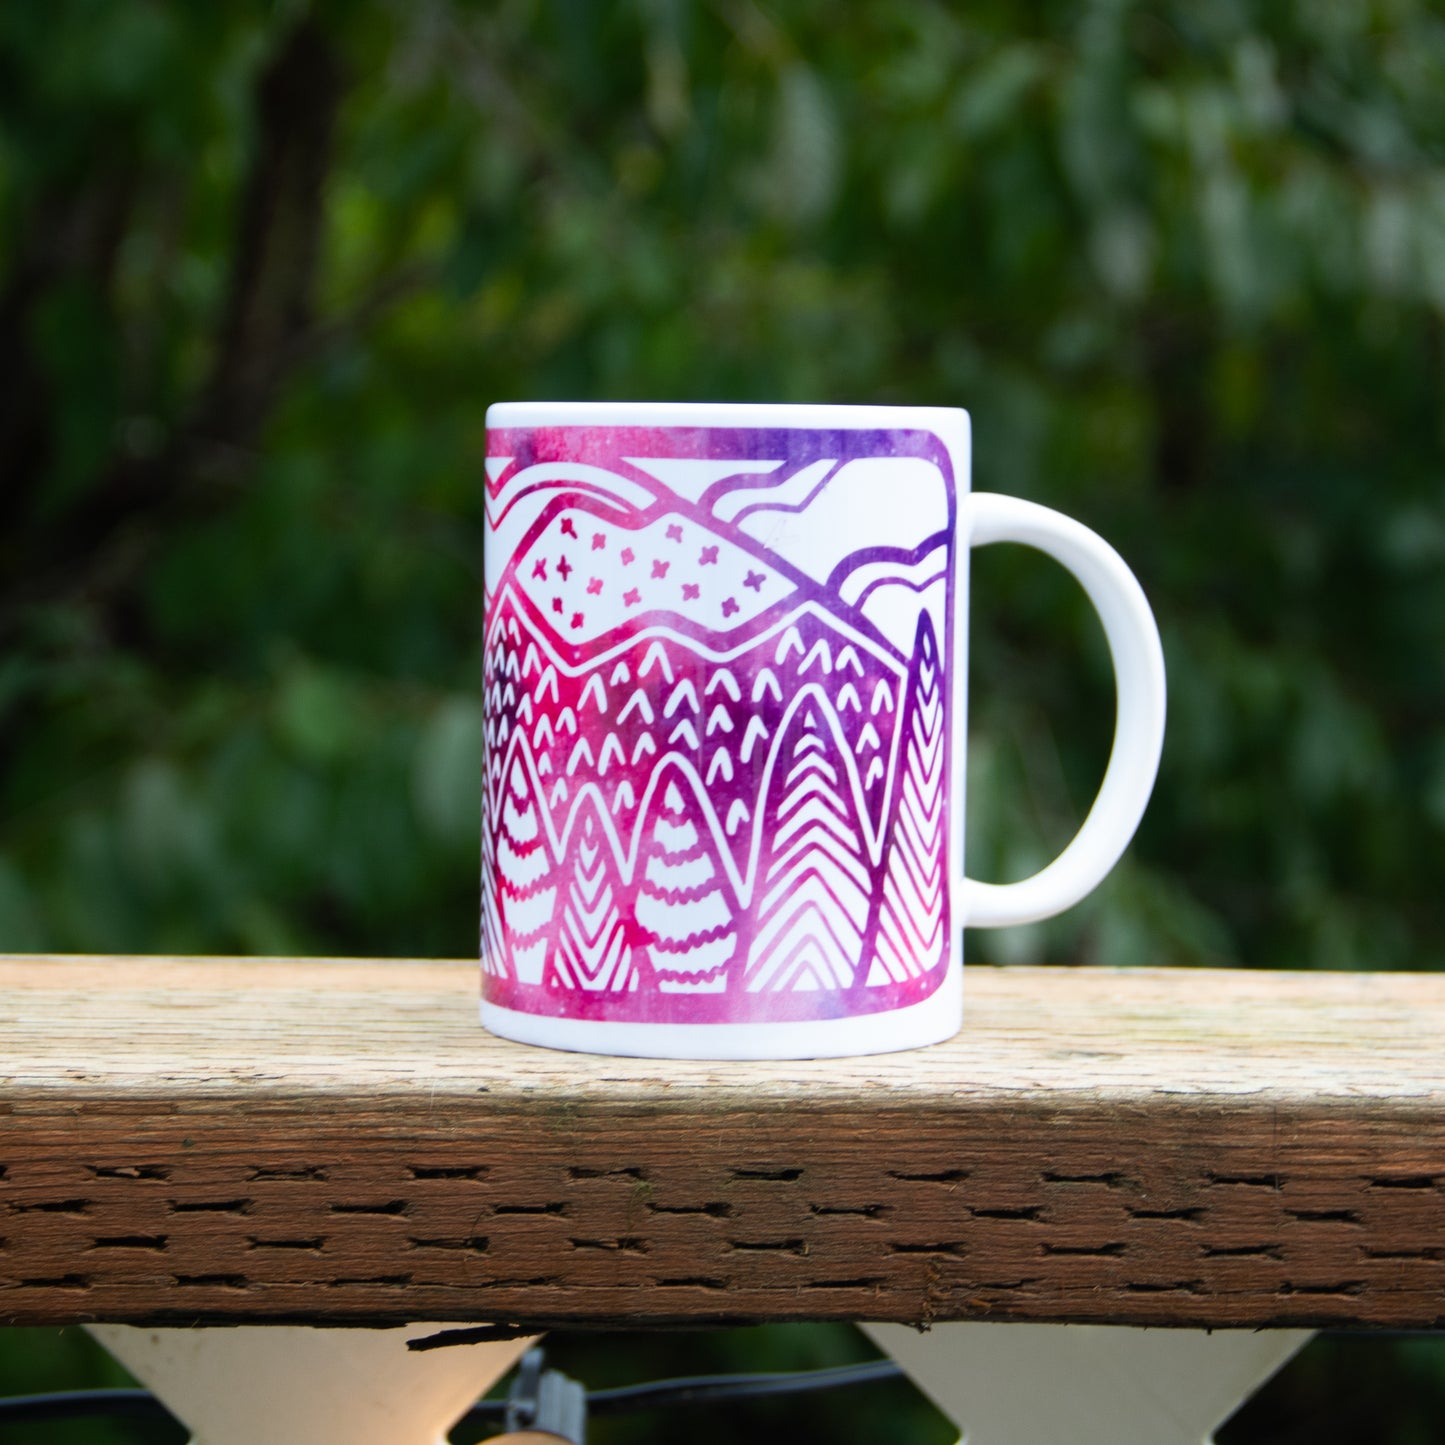 15oz Evergreen State Mug pink watercolor